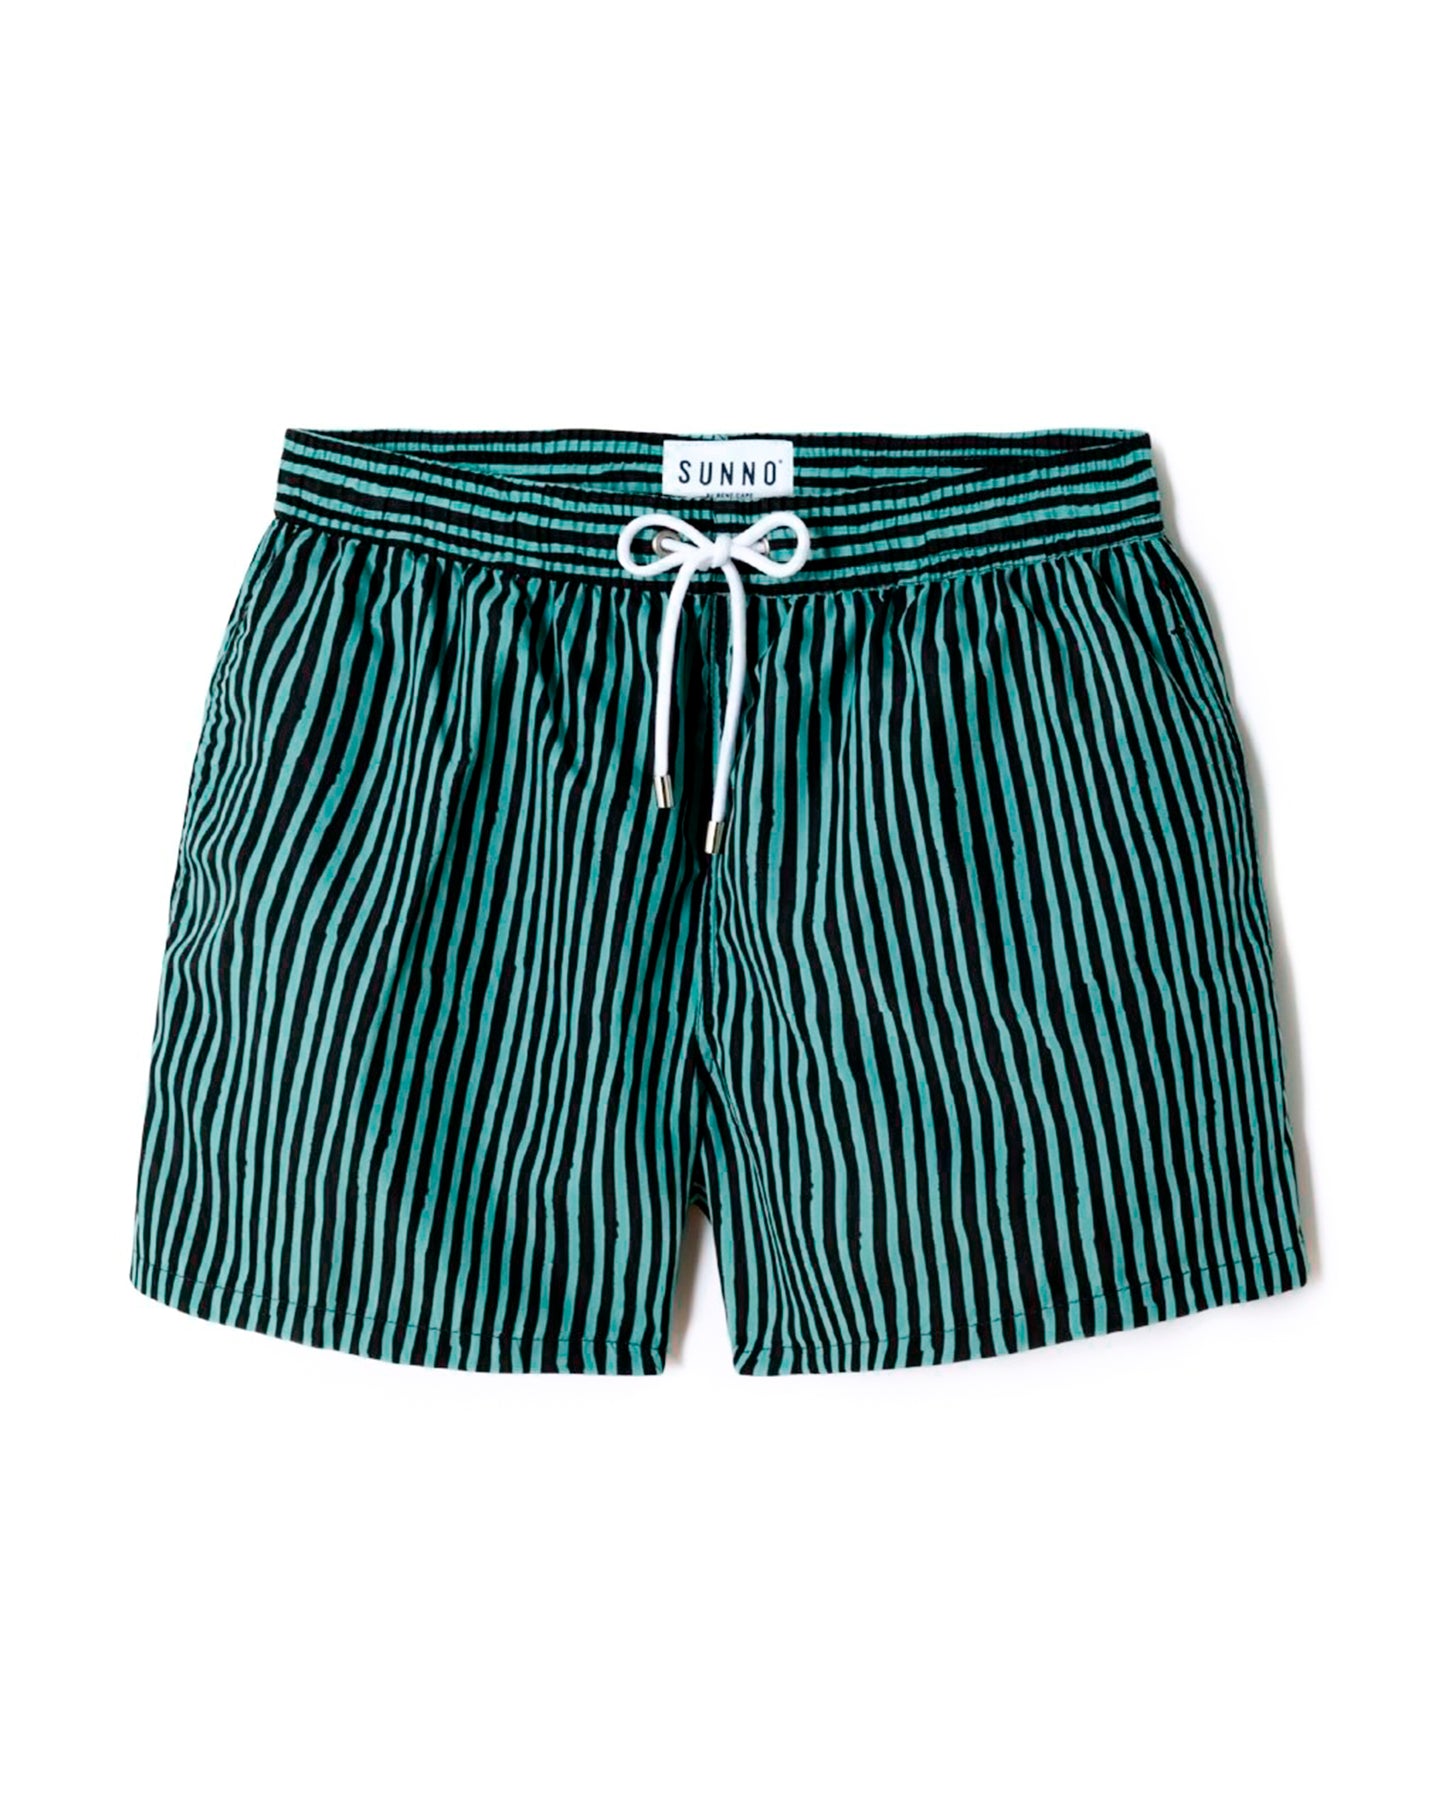 Black and green stripes swim short | Sunno by Bene Cape – SUNNO BY BENE ...